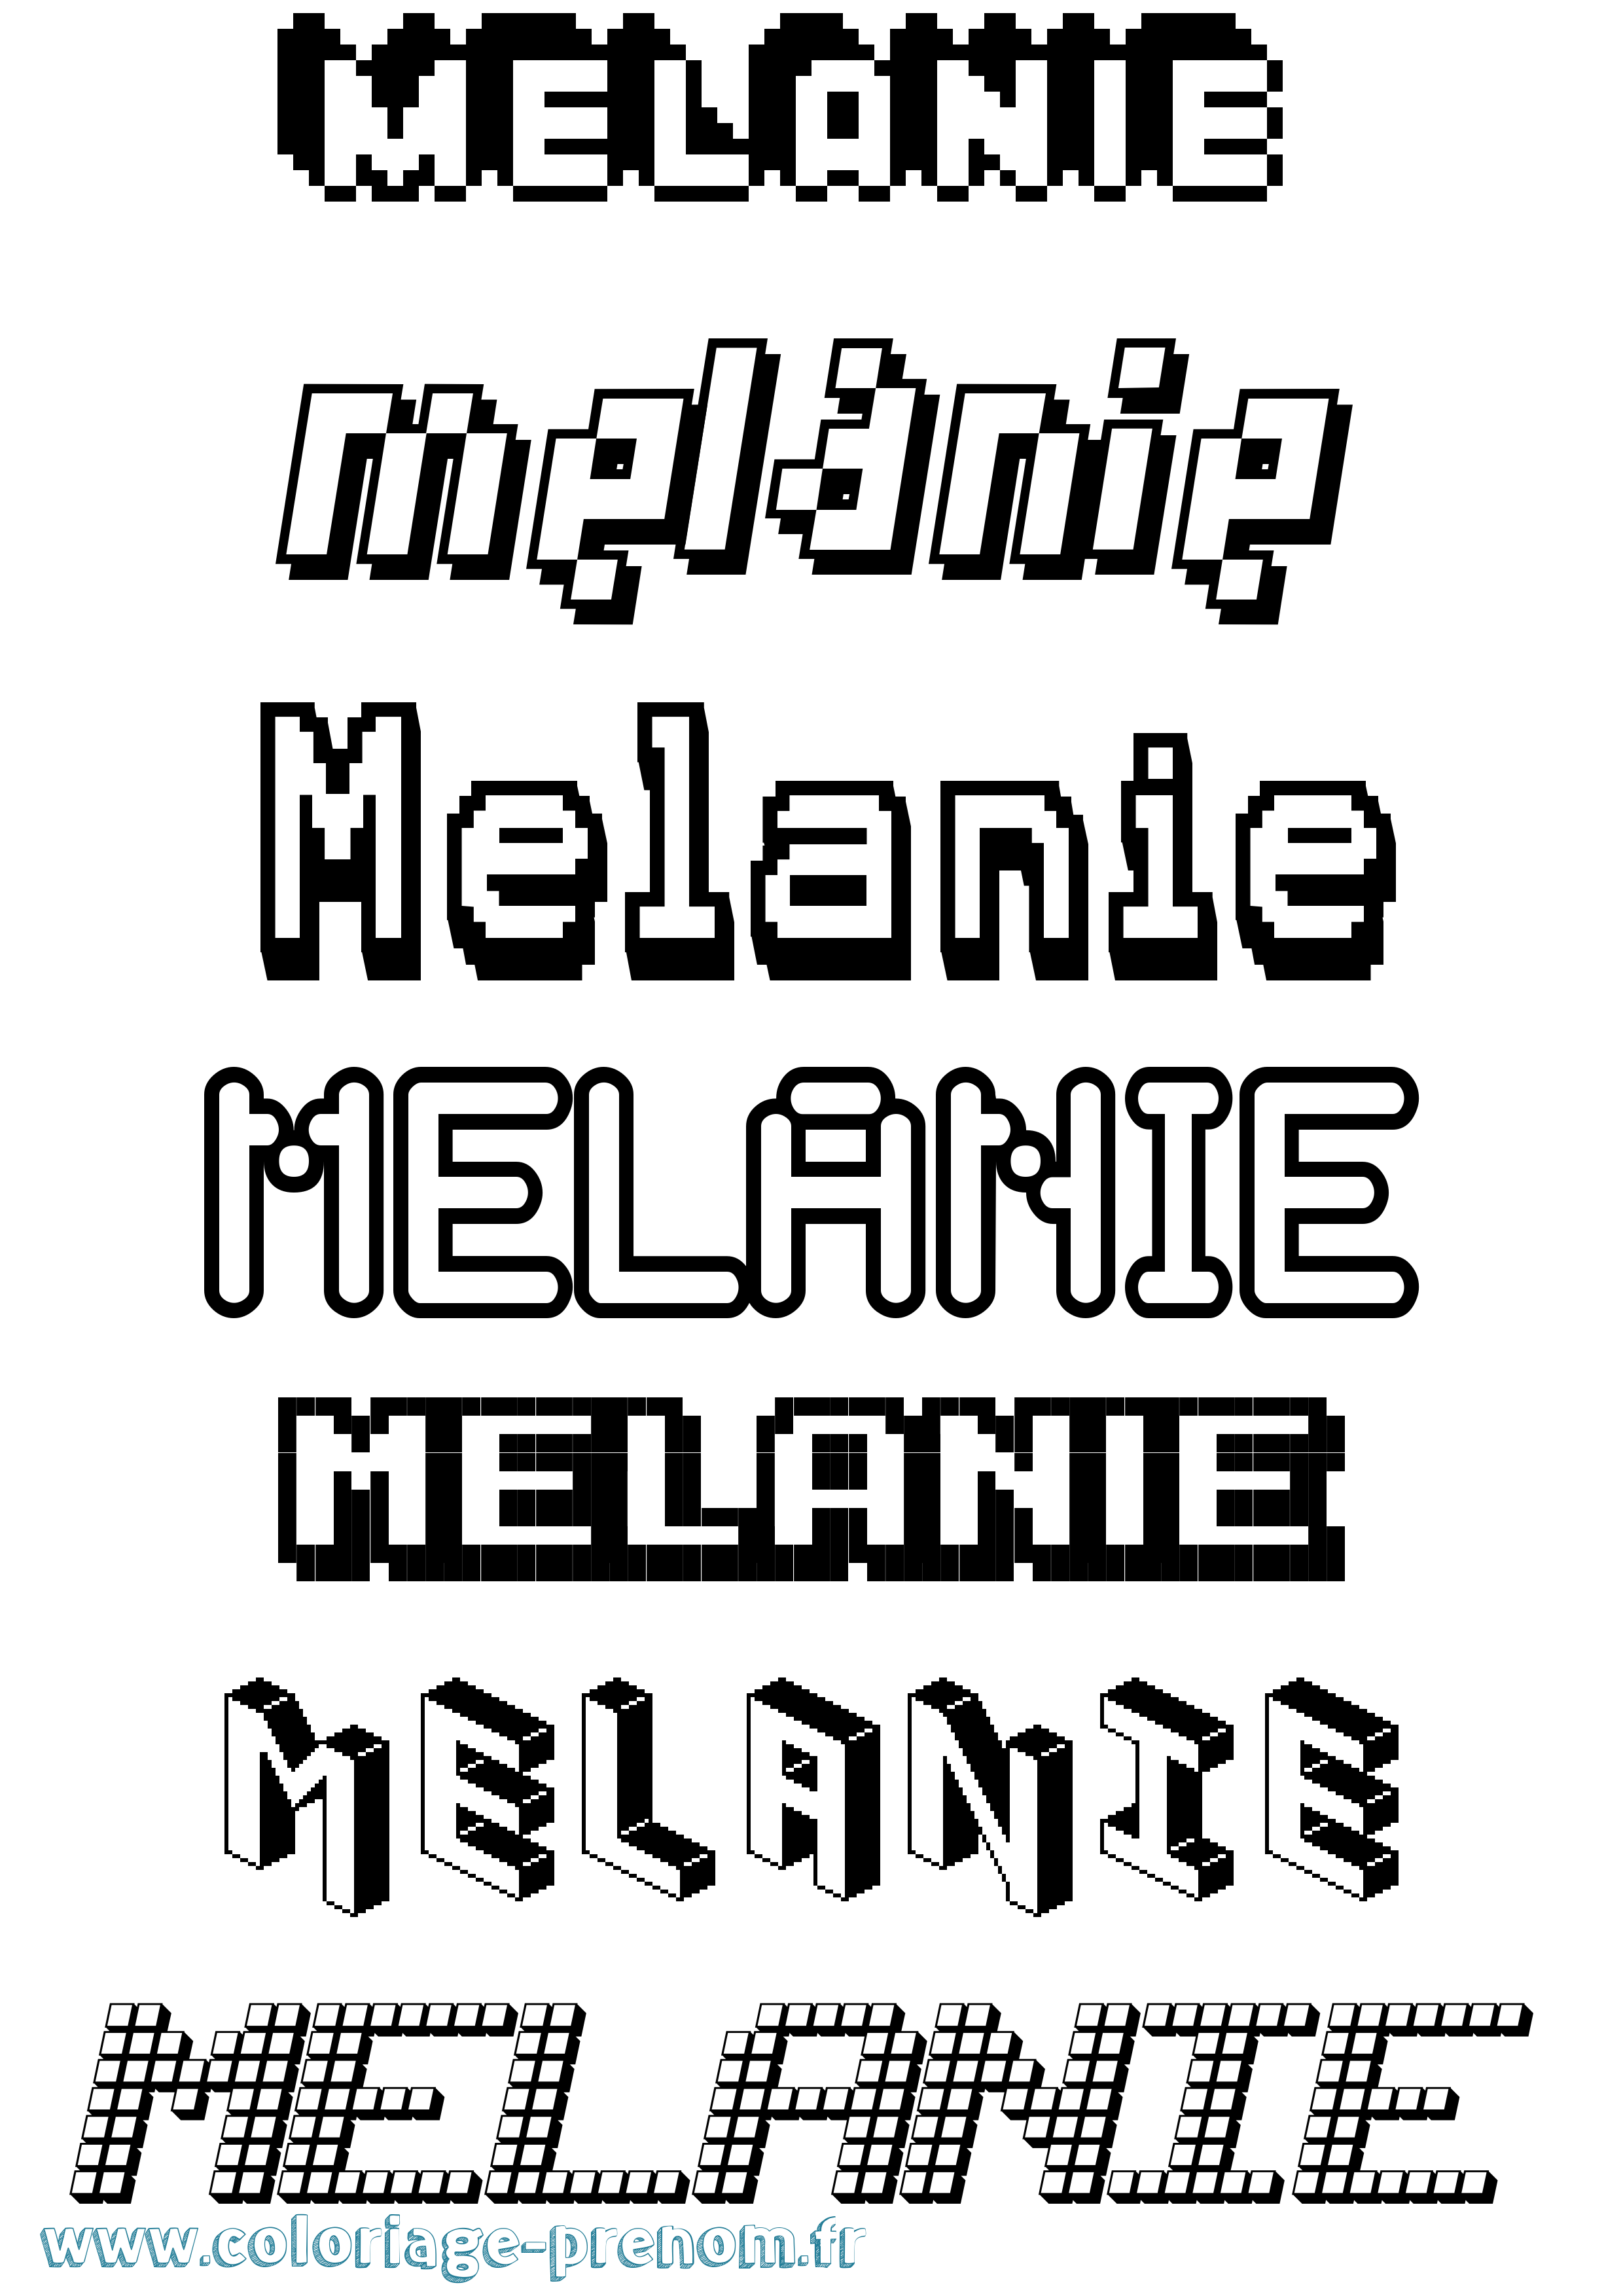 Coloriage prénom Melanie Pixel